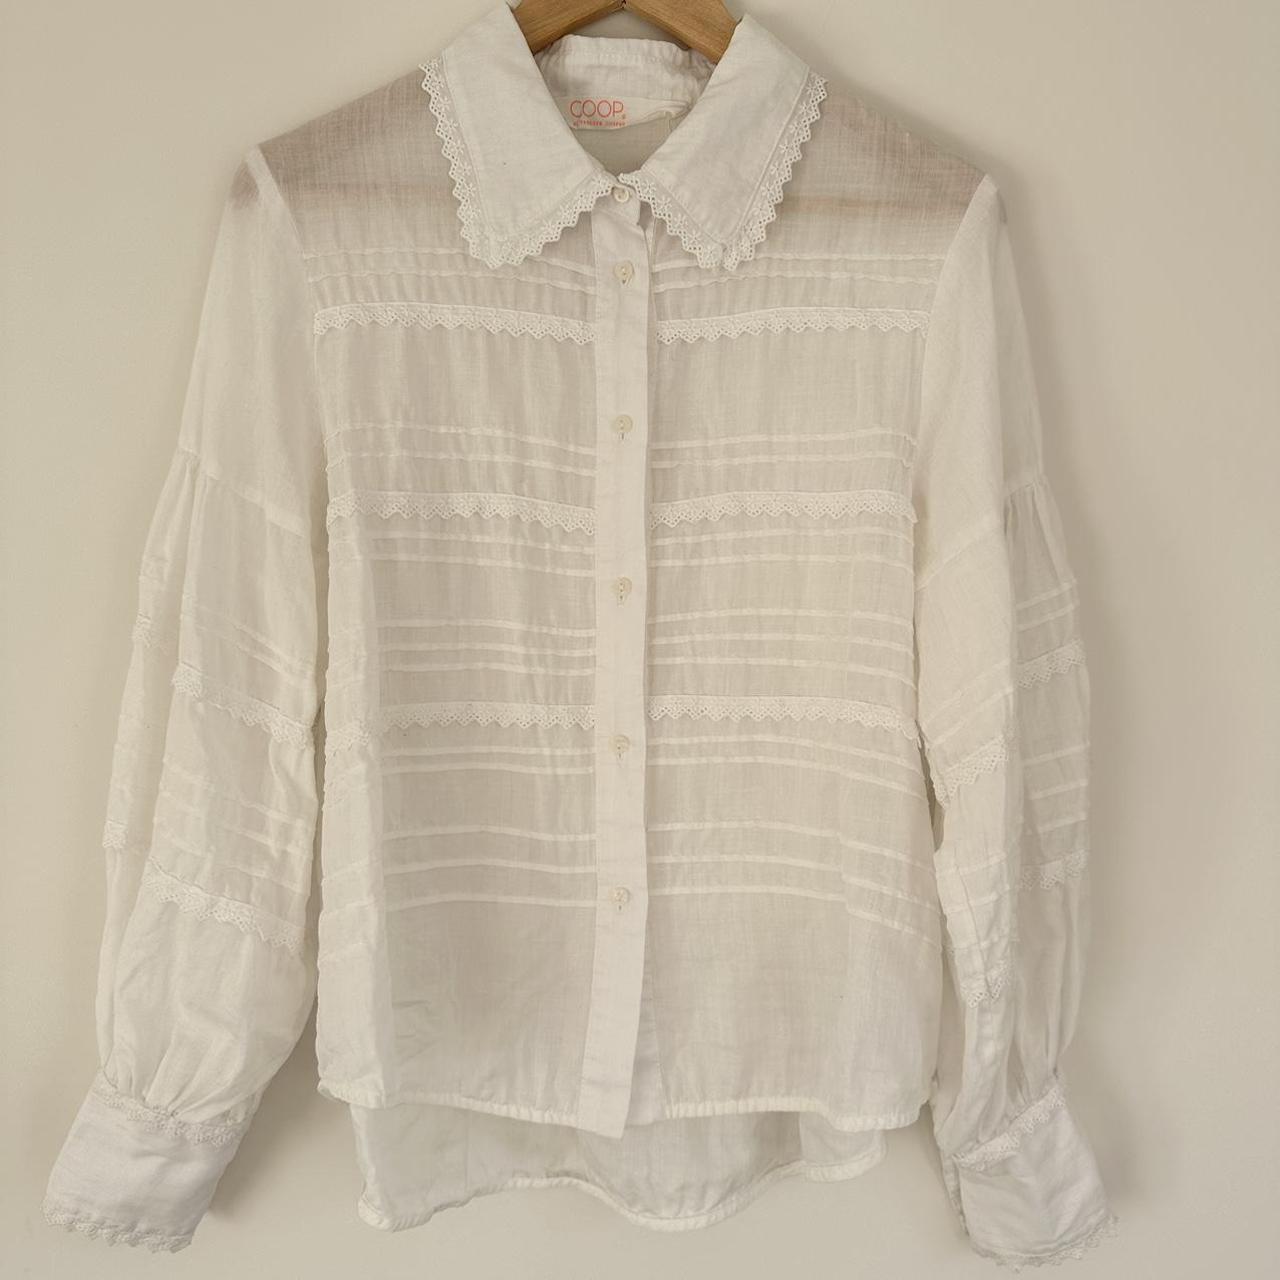 Coop by Trelise Cooper white shirt size Medium |... - Depop